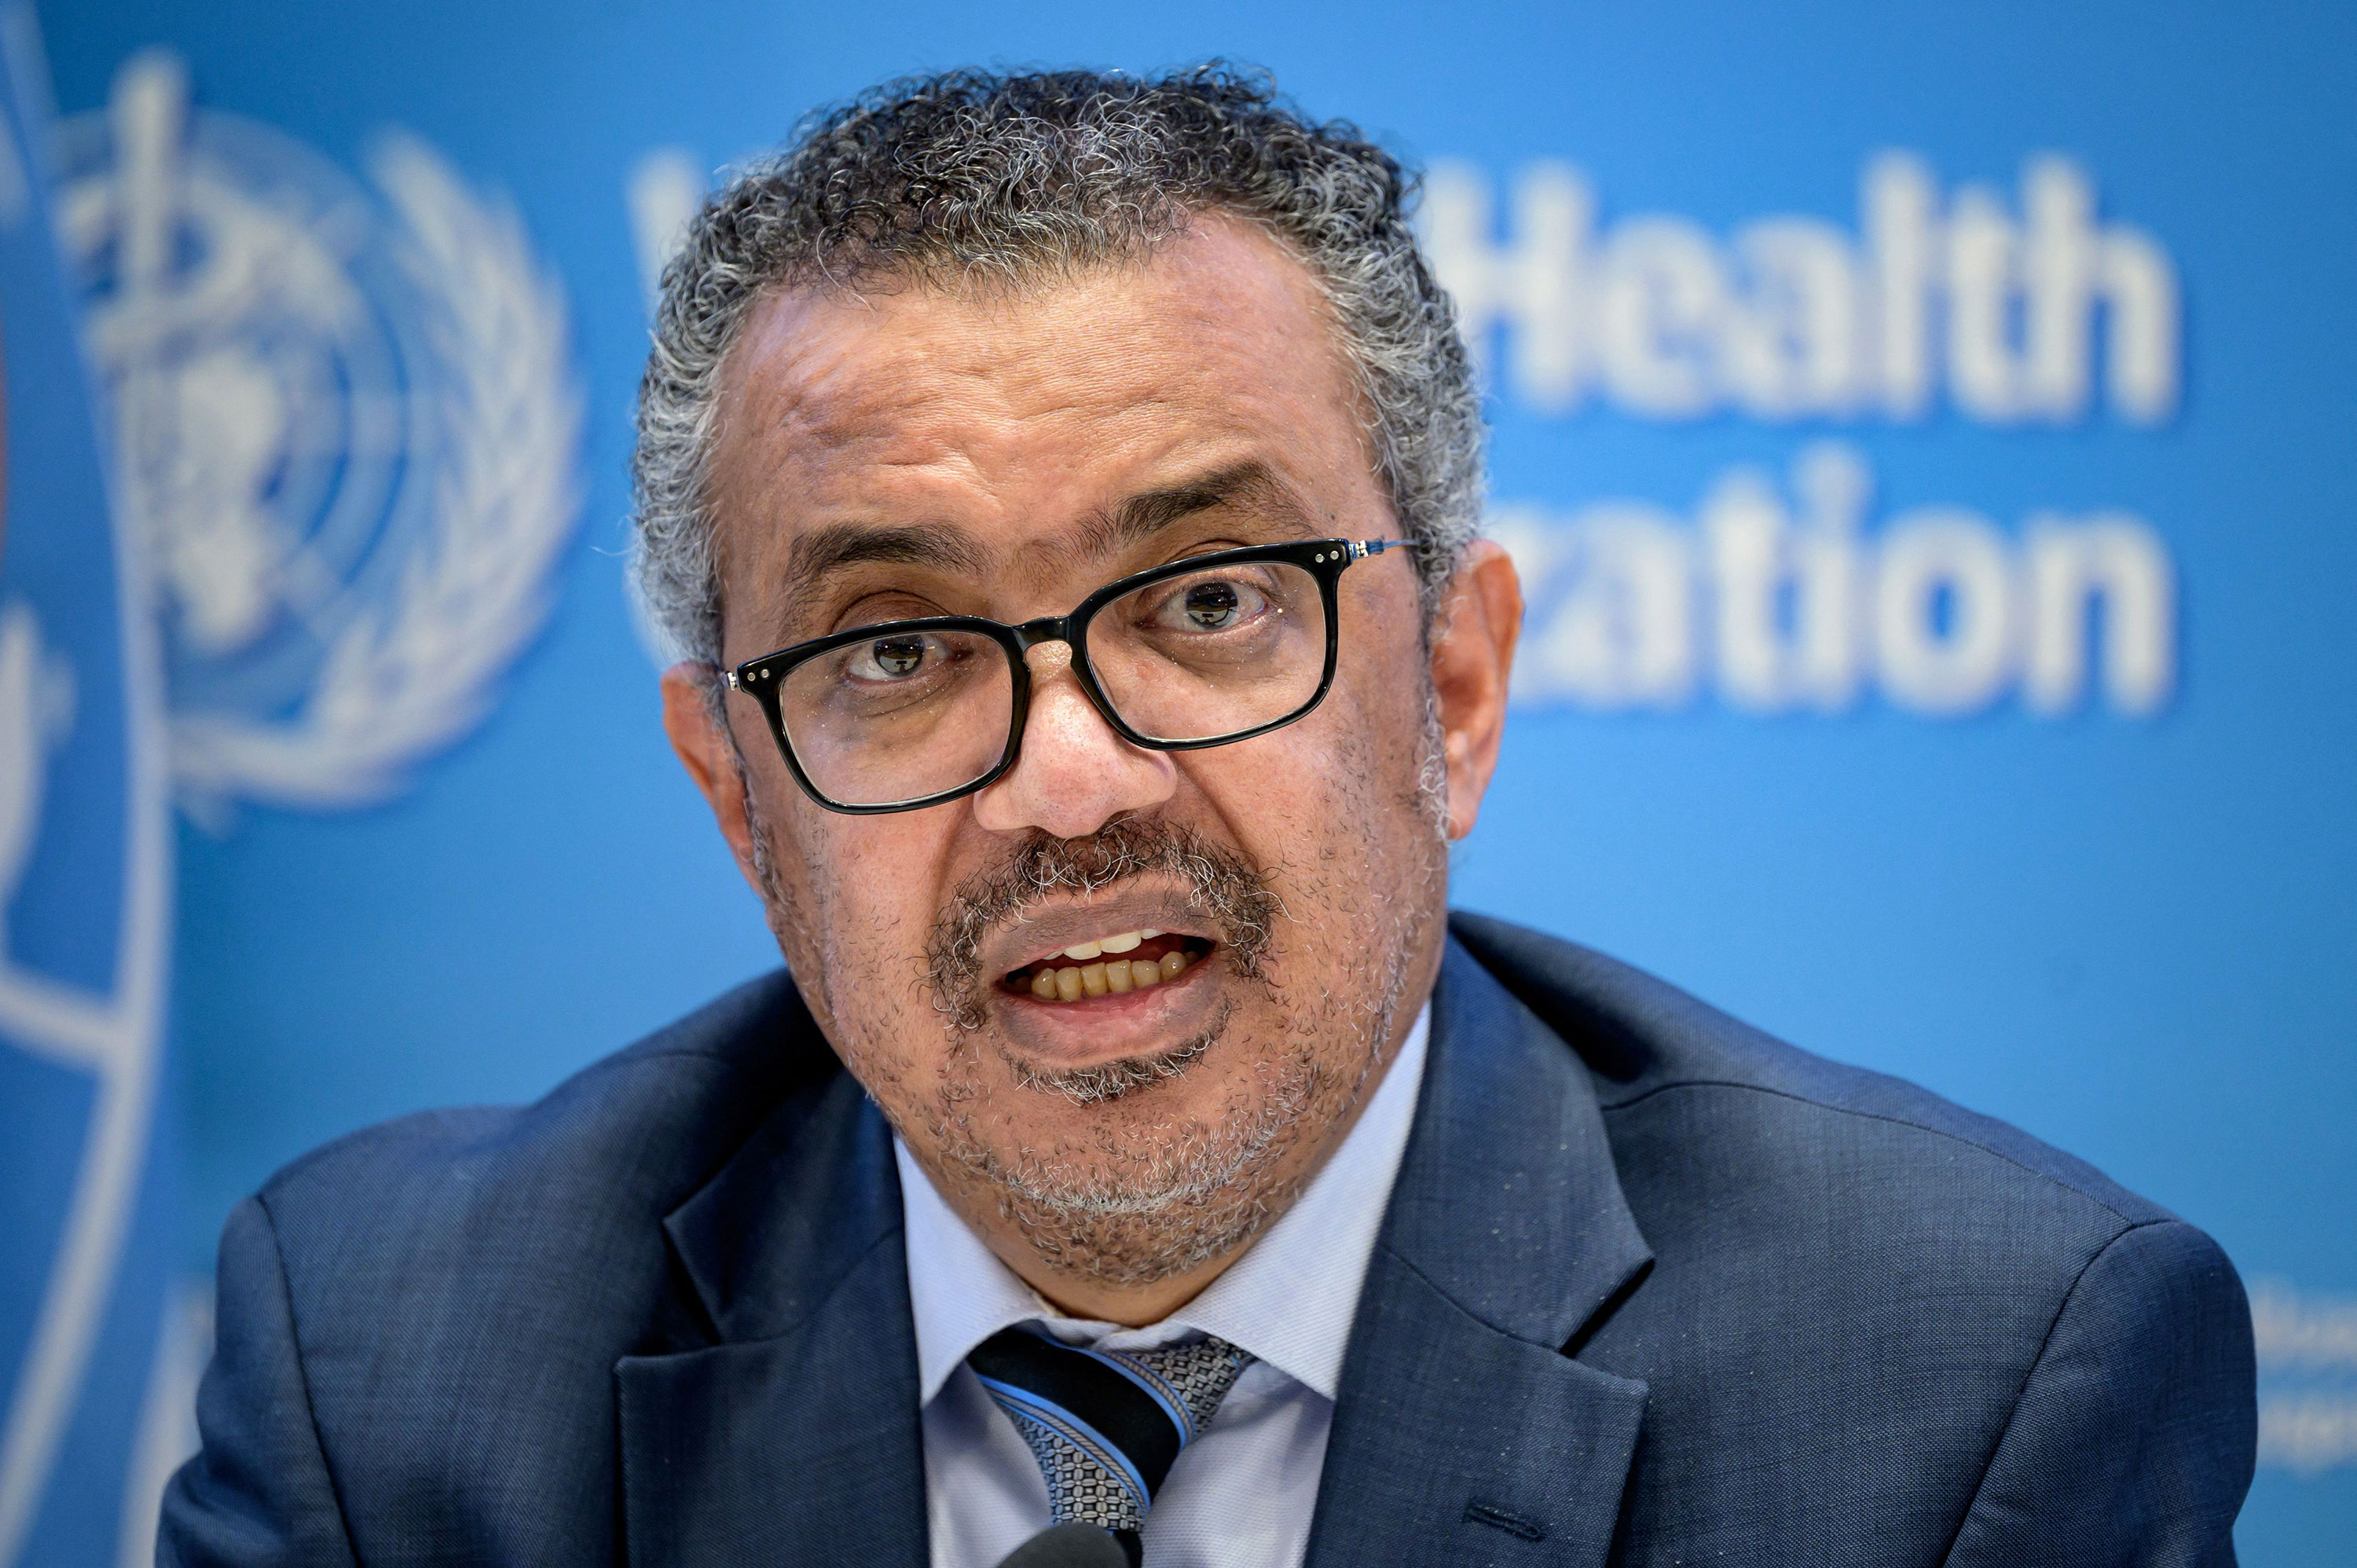 World Health Organization Director-General Tedros Adhanom Ghebreyesus speaks during a press conference in December.